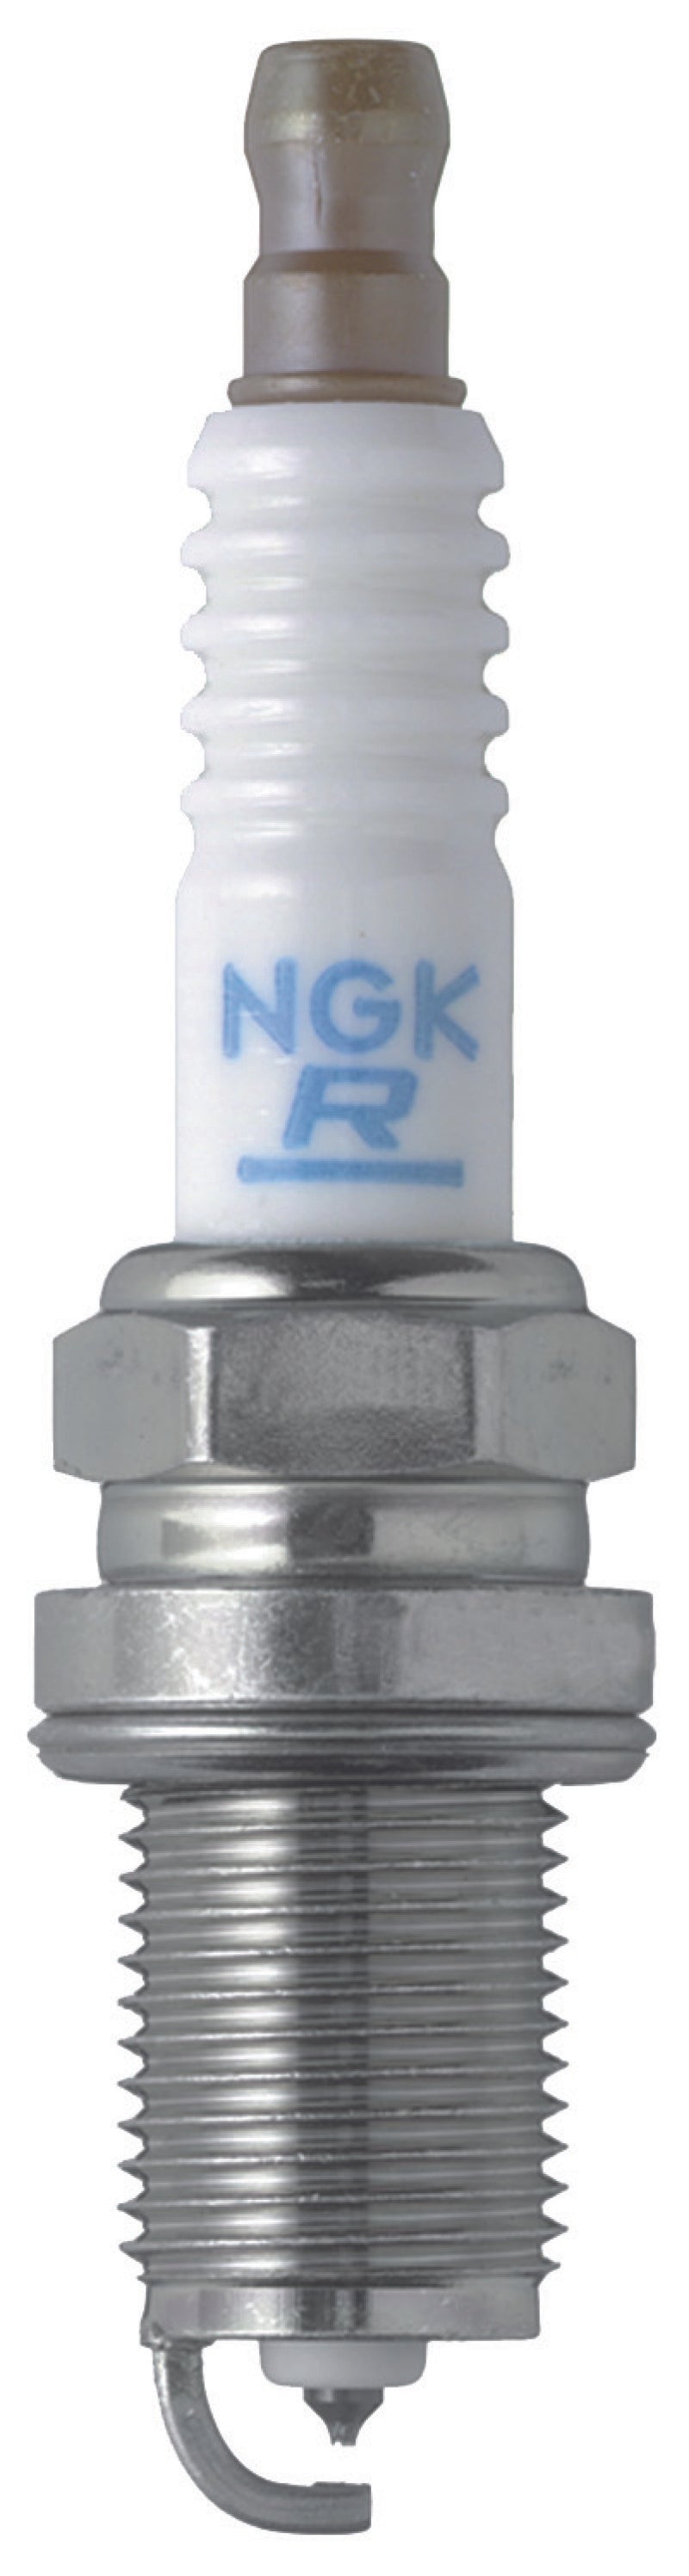 NGK Double Platinum Spark Plug Box of 4 (PRF6A-11).